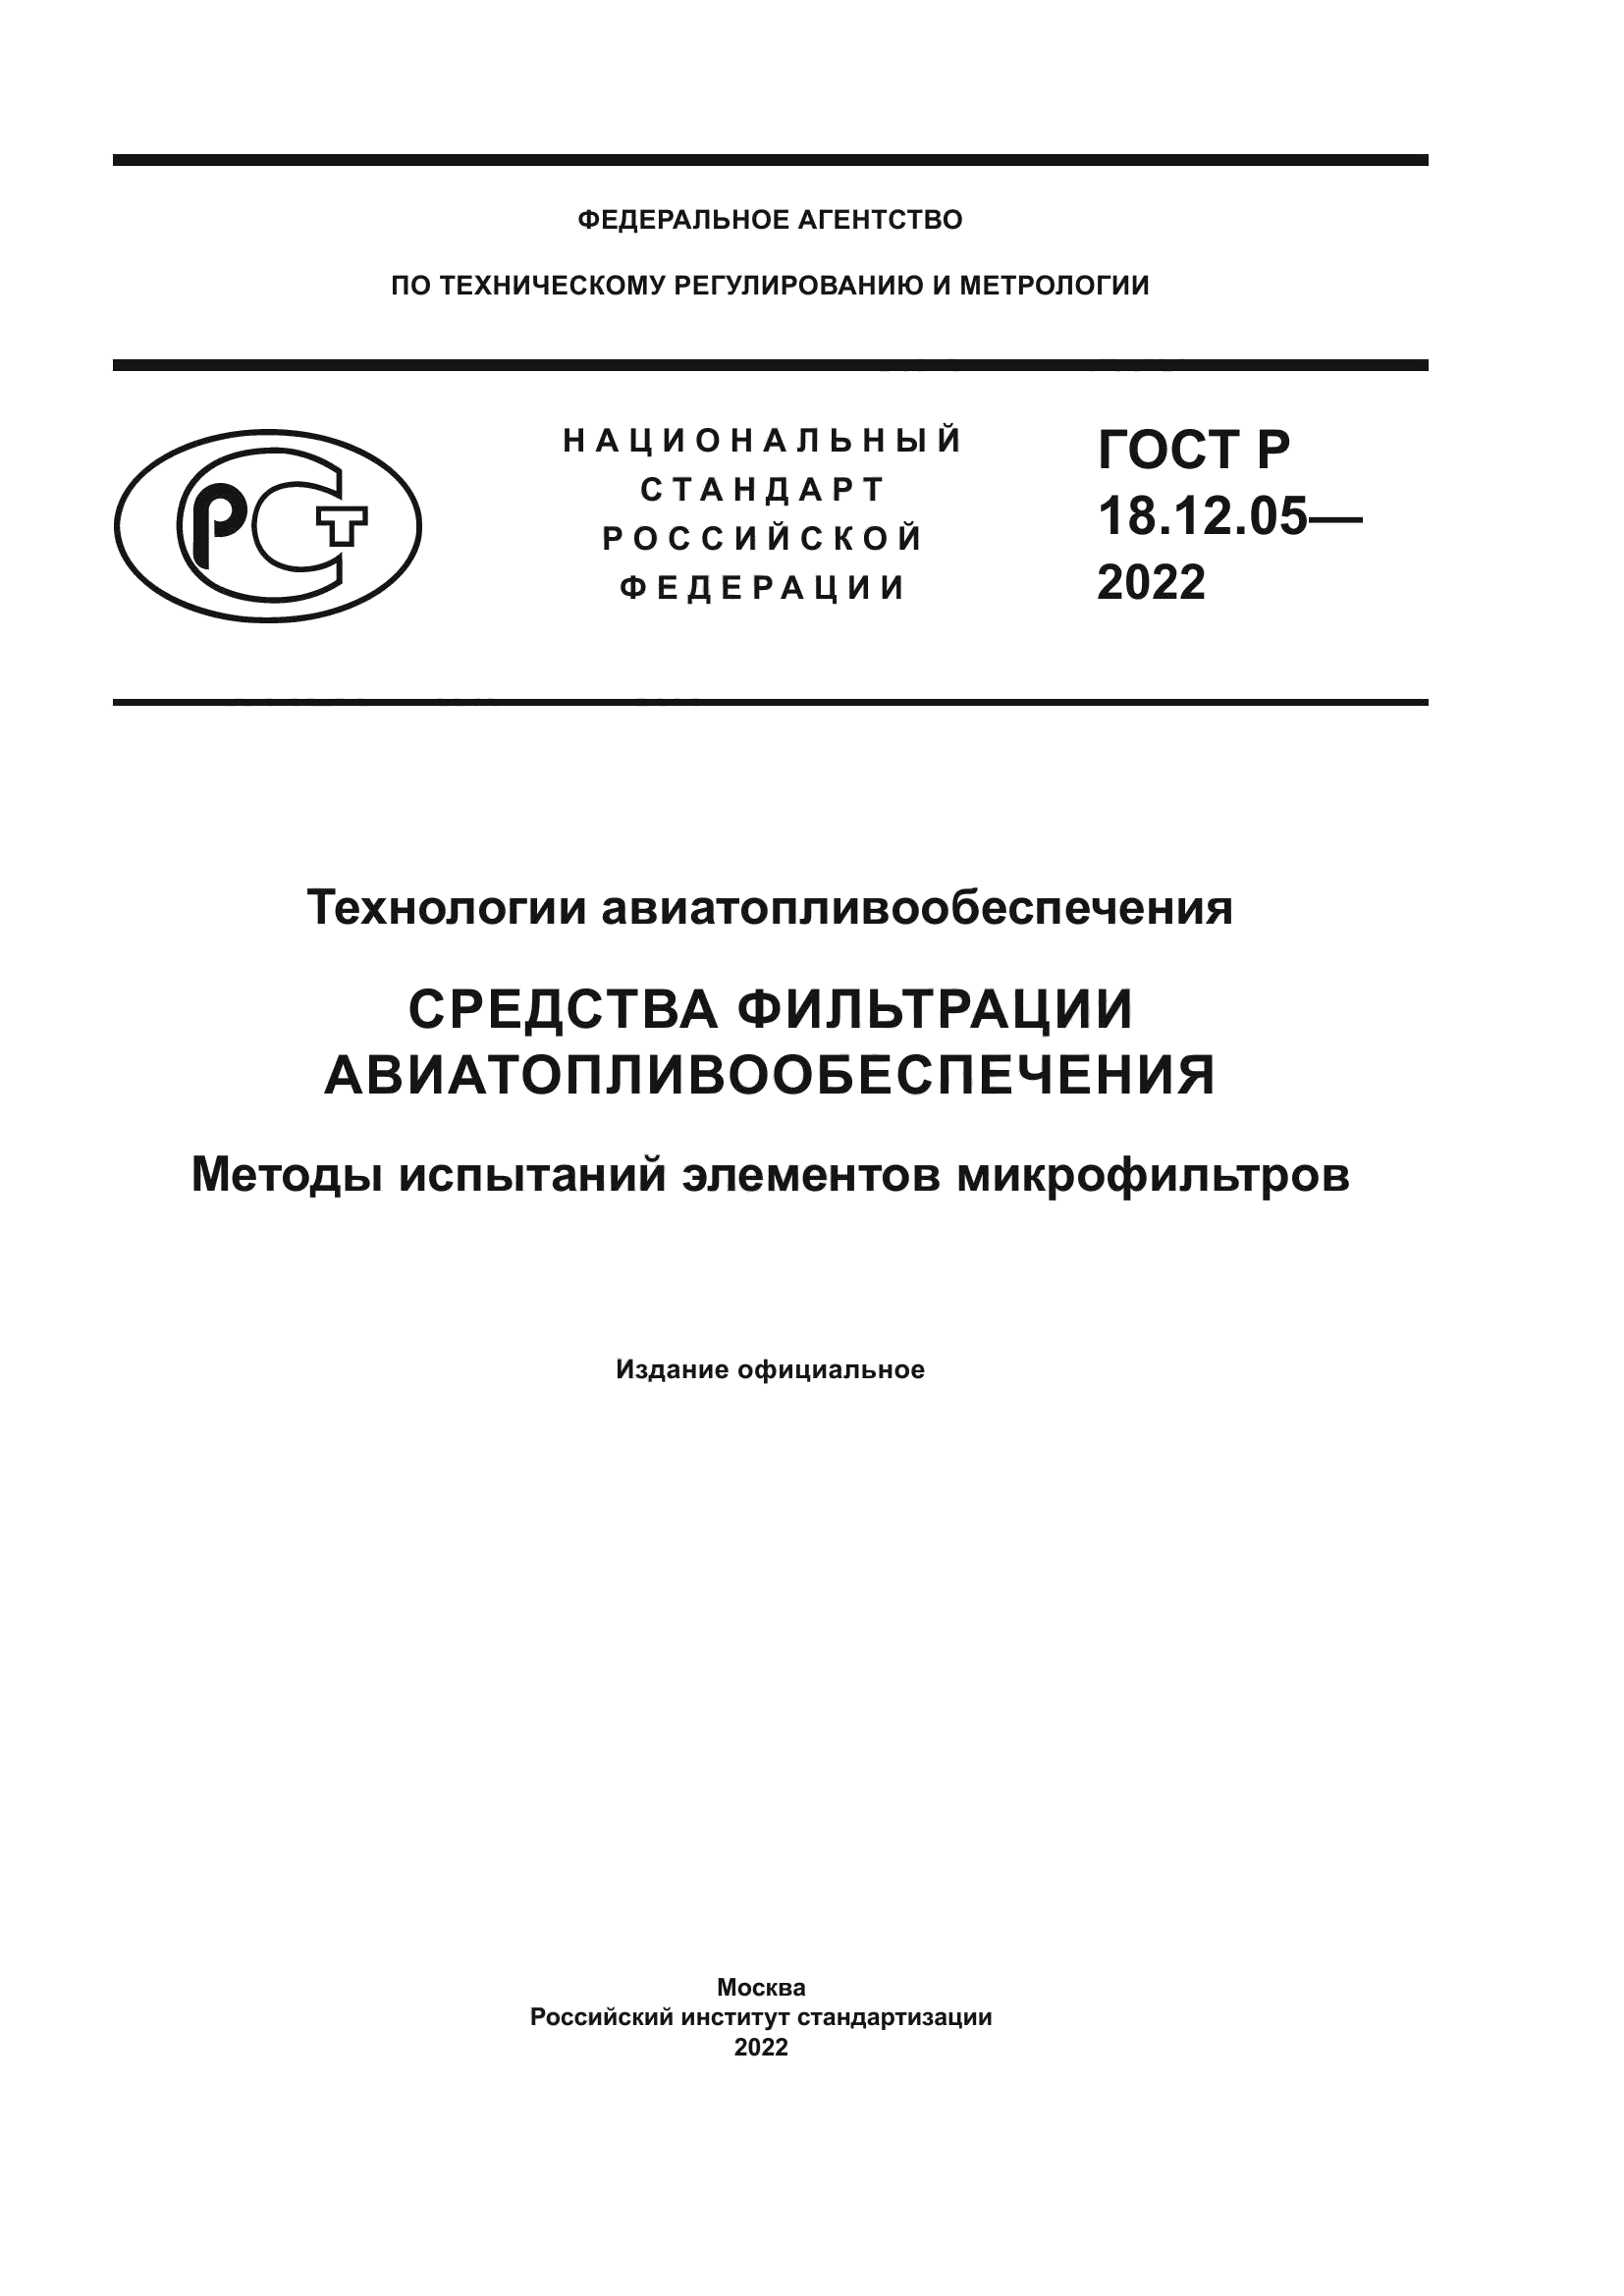 ГОСТ Р 18.12.05-2022